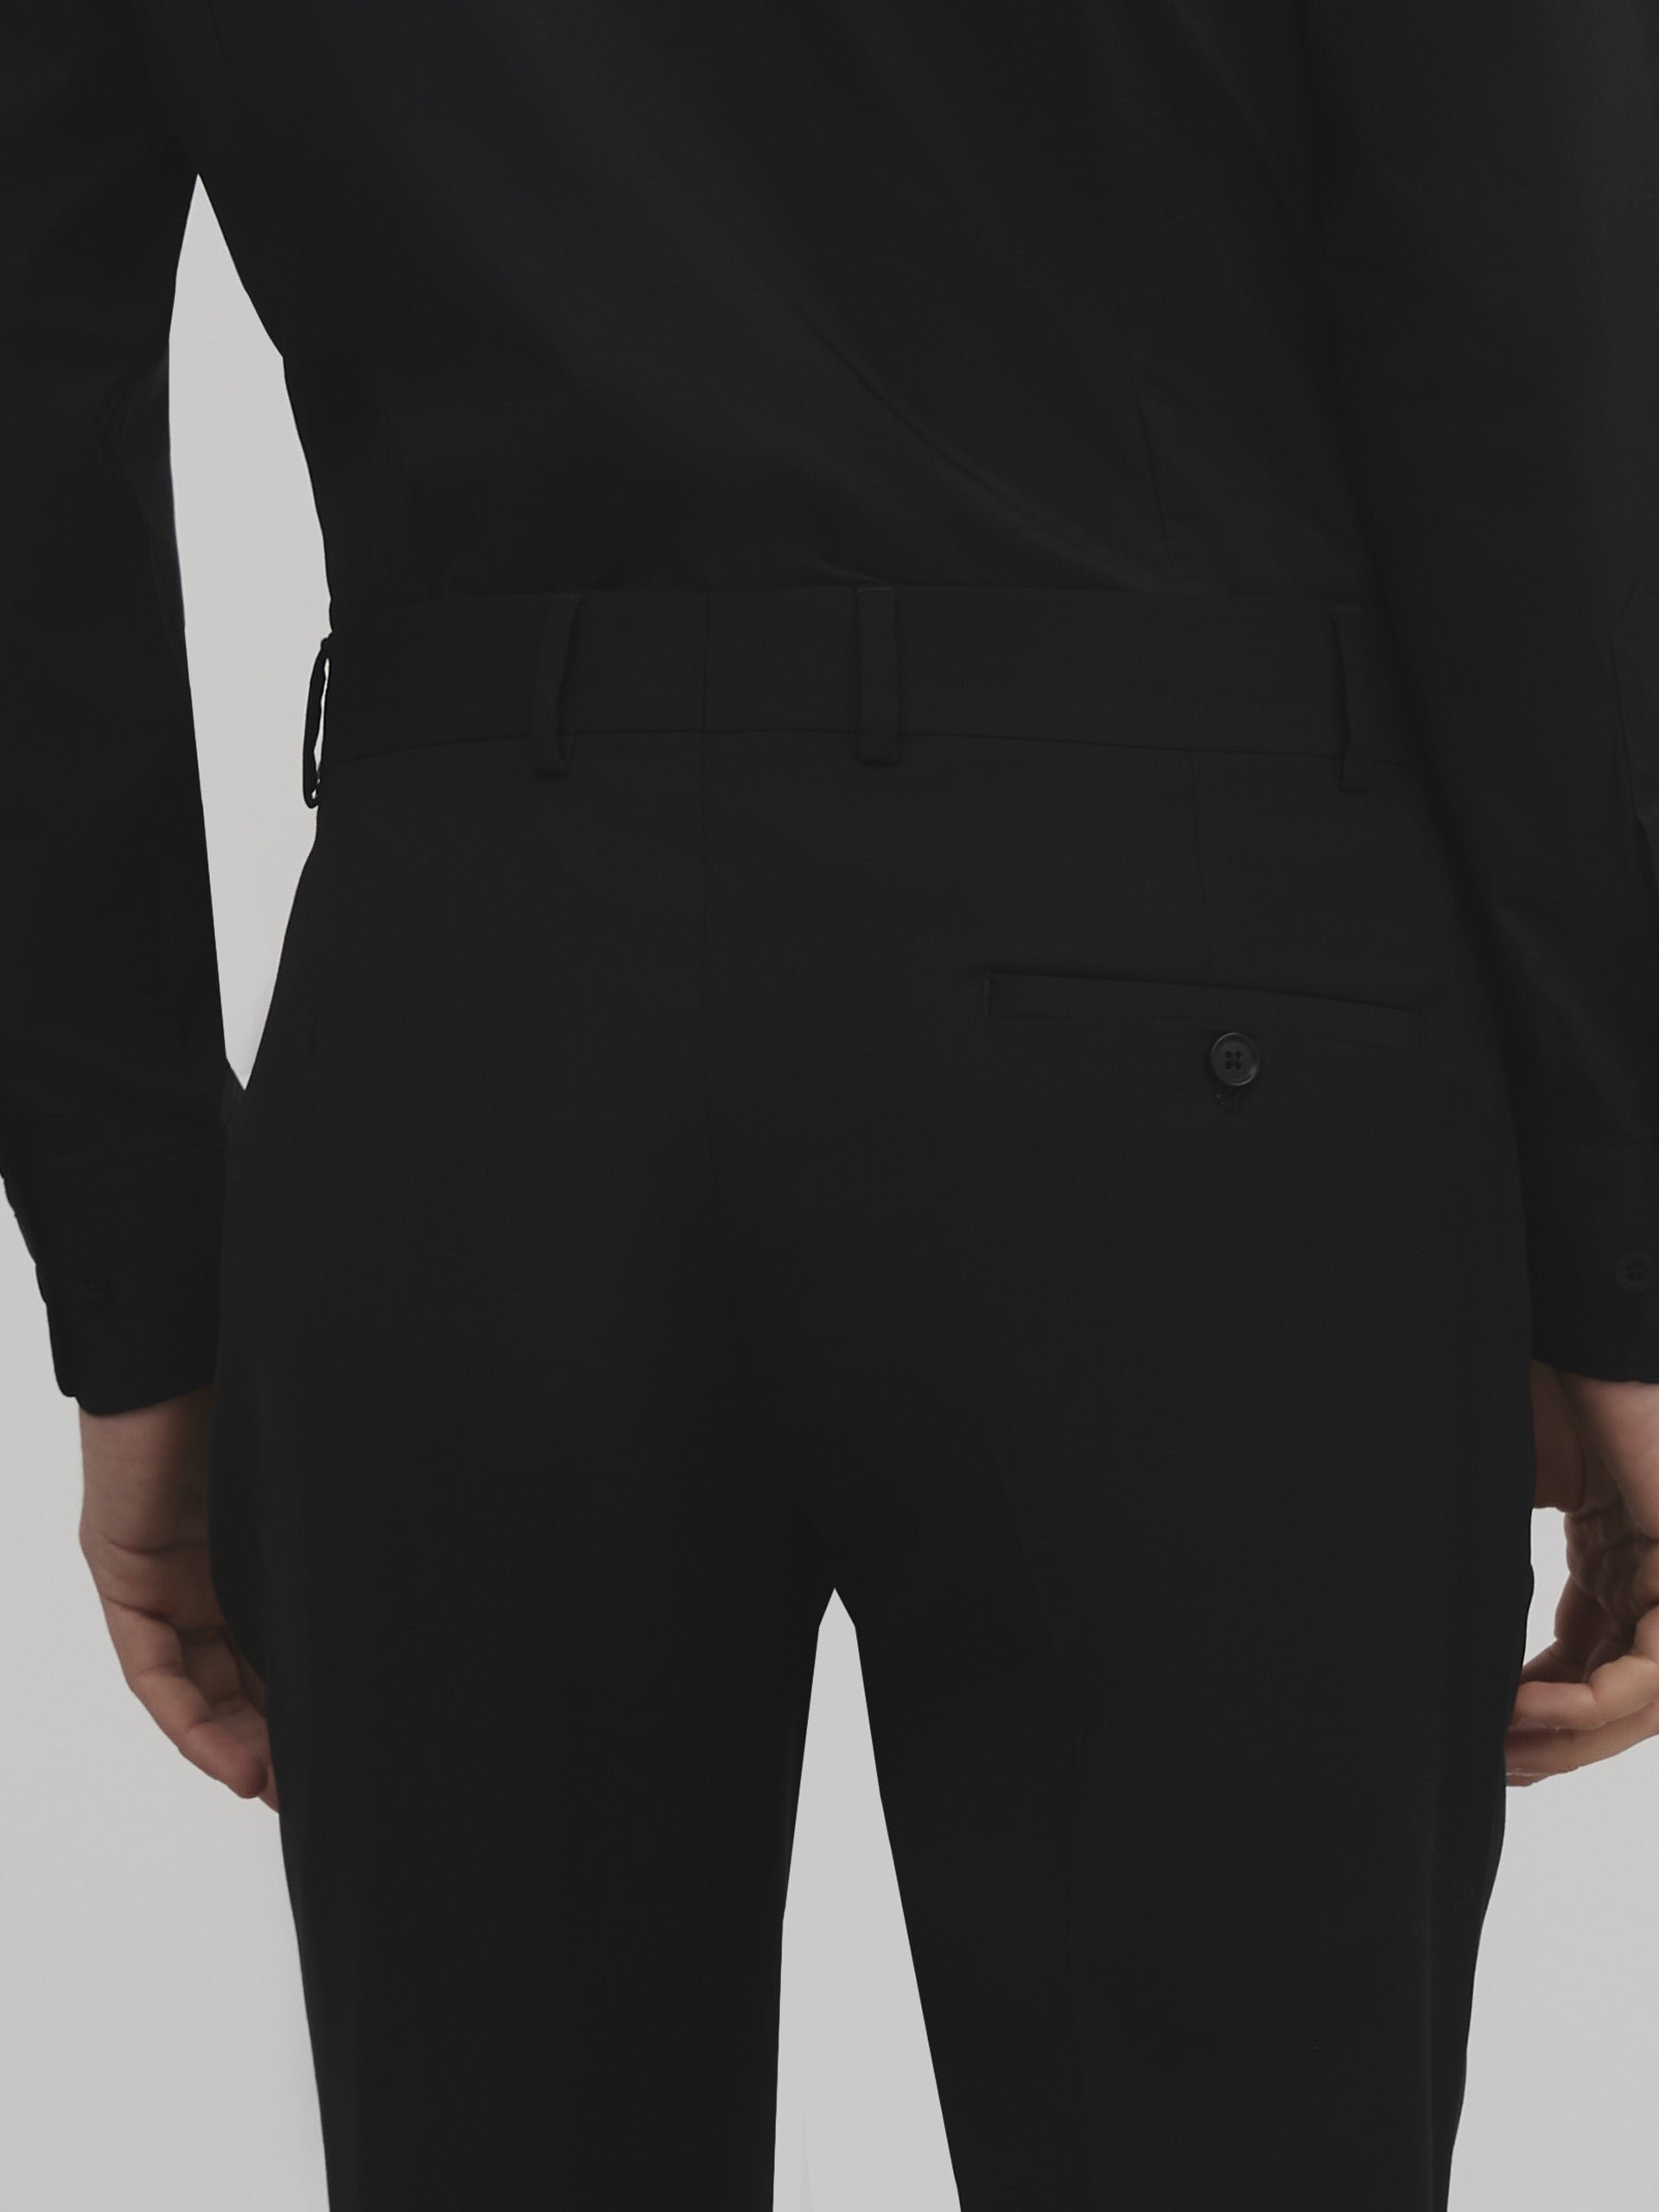 Pantalon traje clasico negro